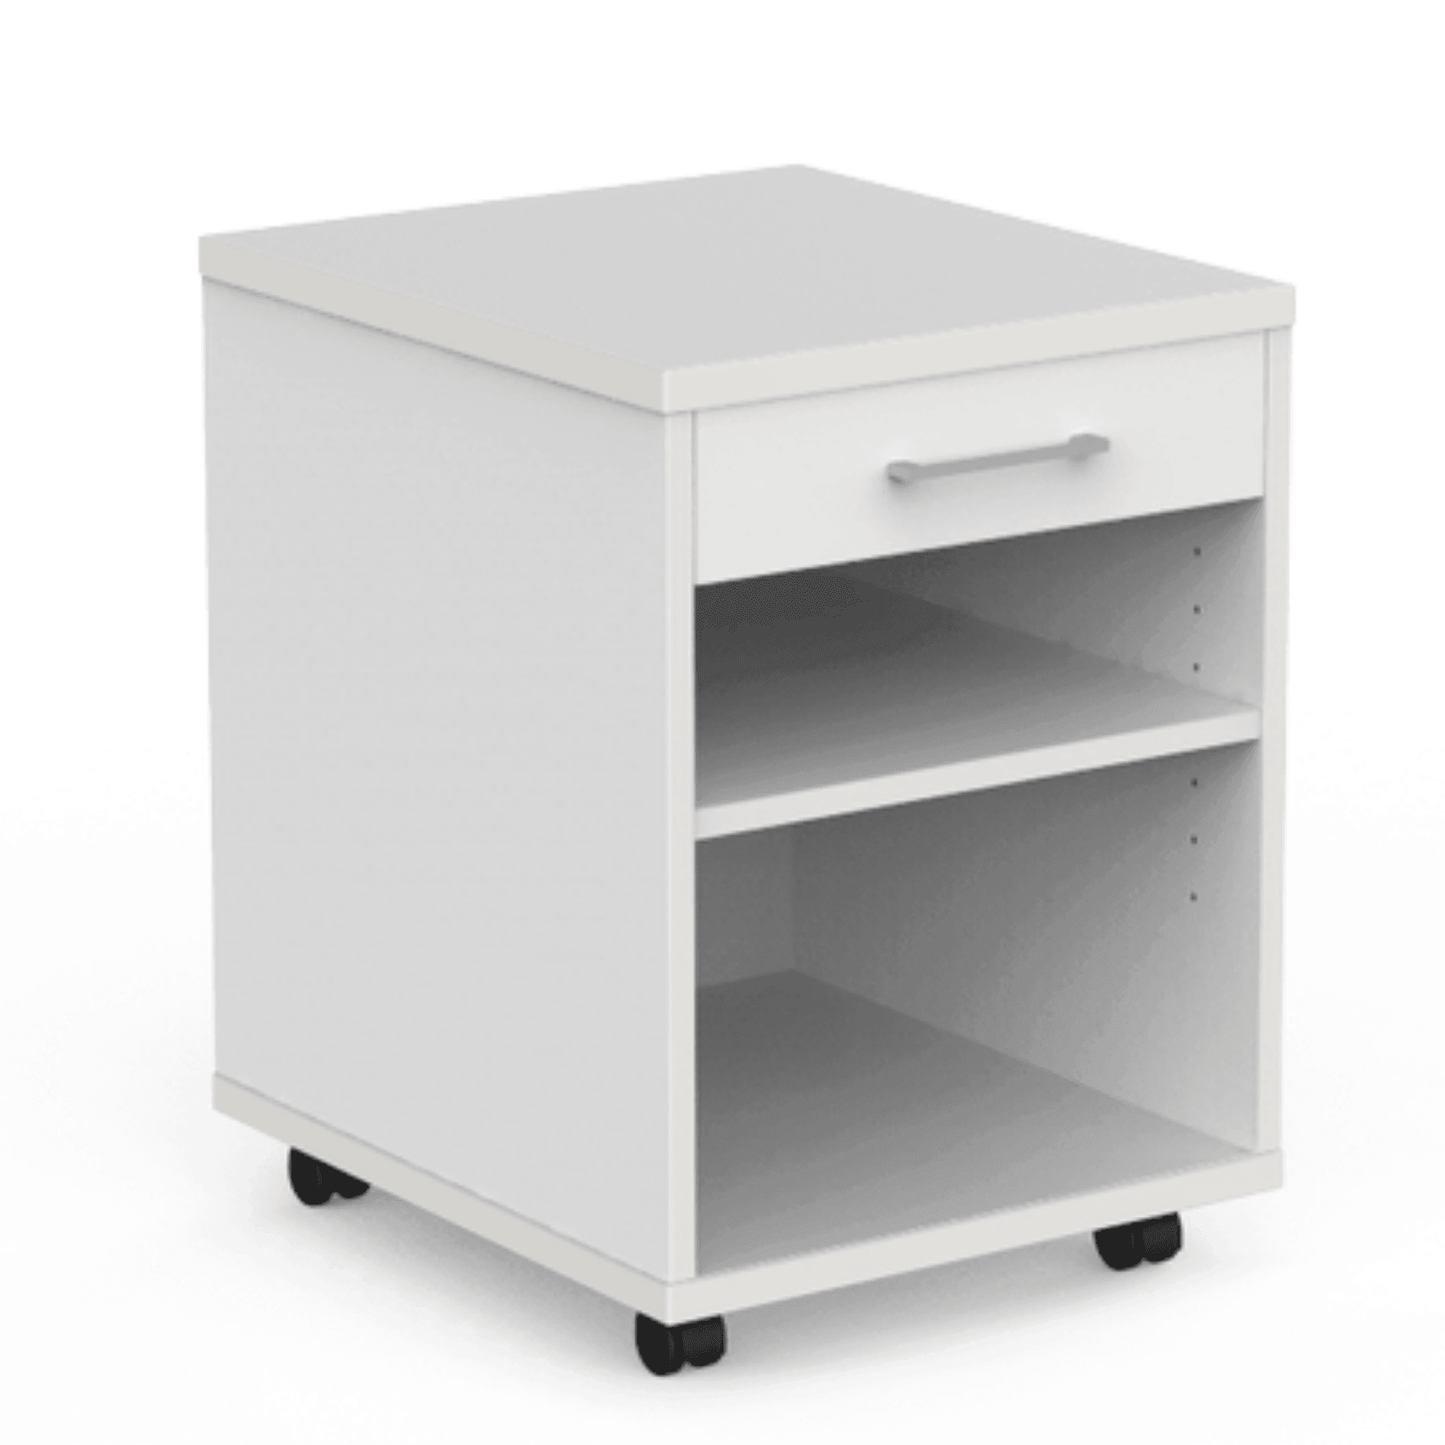 EkoSystem Mobile Book Case Pedestal with EkoSystem Drawer Add-On - Office Furniture Company 